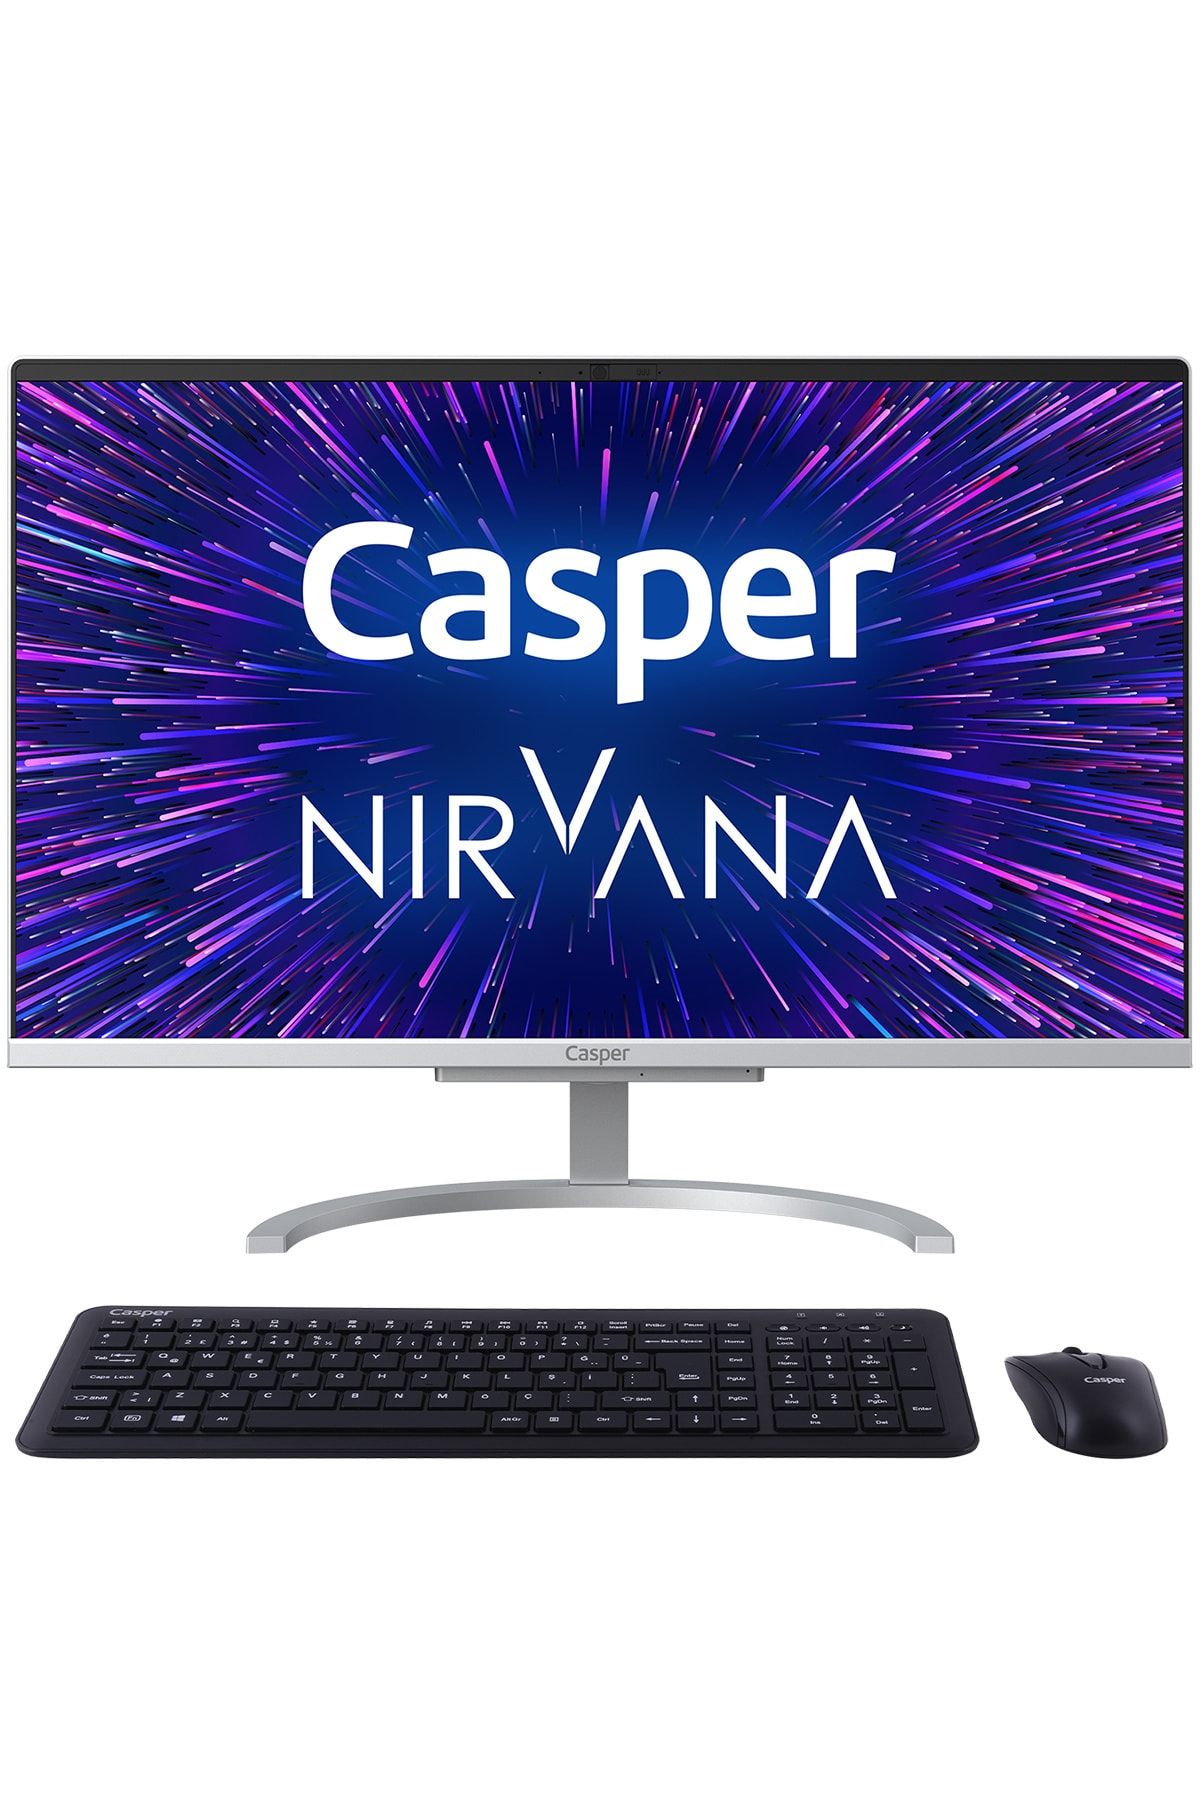 Casper Nirvana A46.1035-8c00x-v Intel Core I5-1035g1 8gb 120gb Ssd Freedos 21.5" Fhd